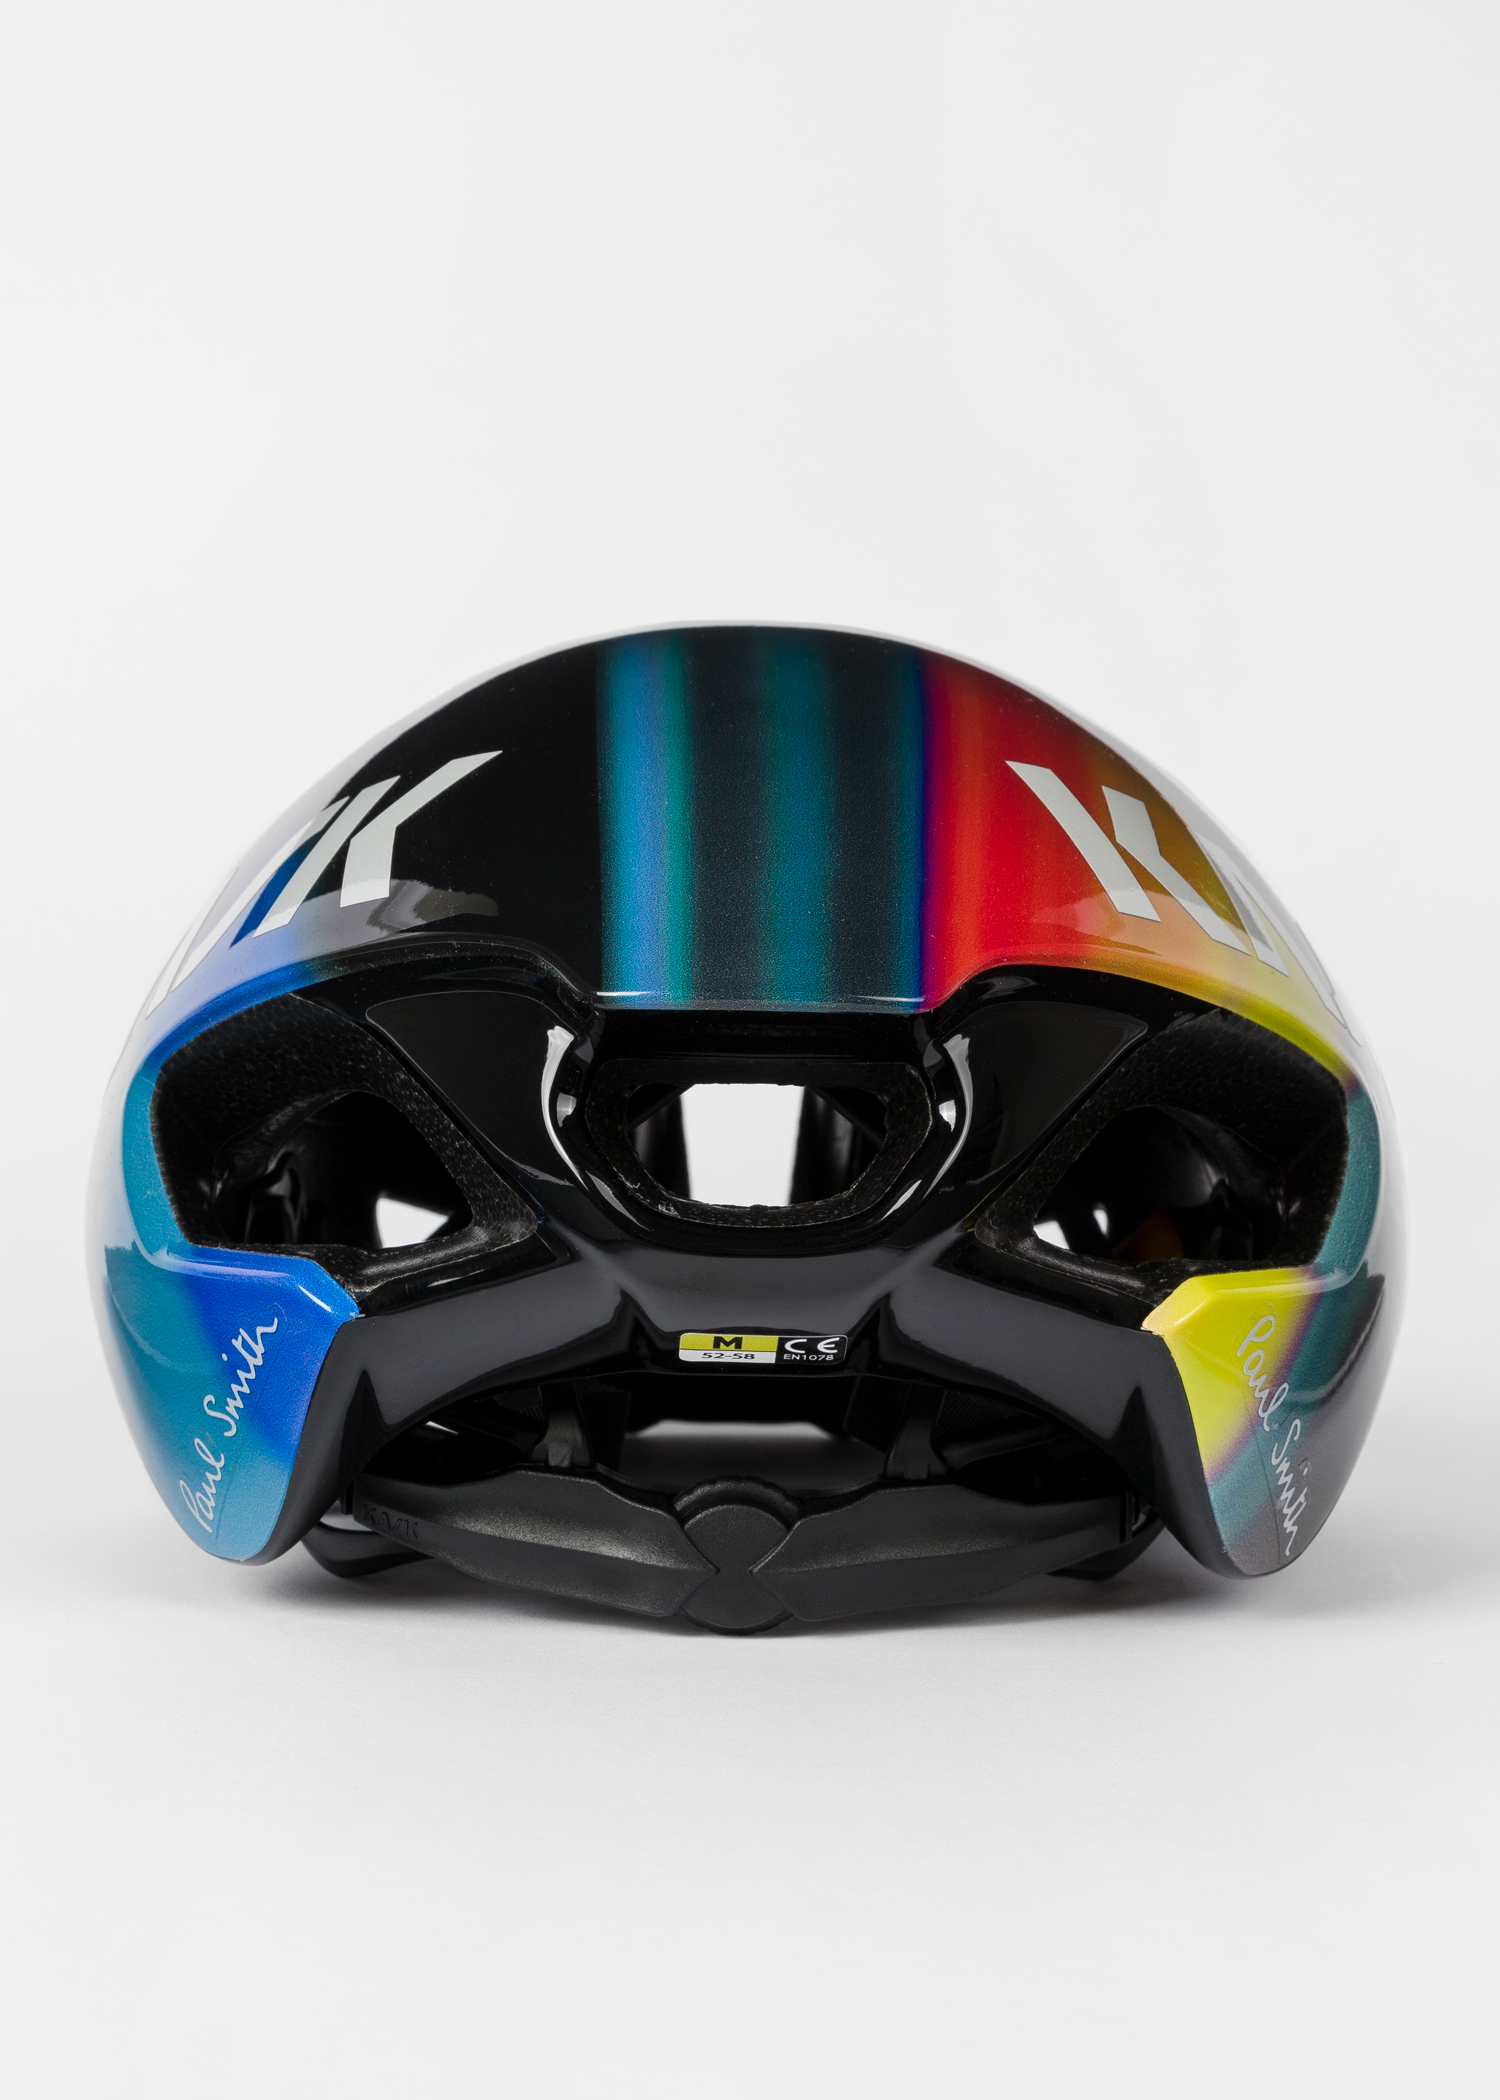 Back view - Paul Smith + Kask 'Rainbow Stripe' Utopia US Cycling Helmet